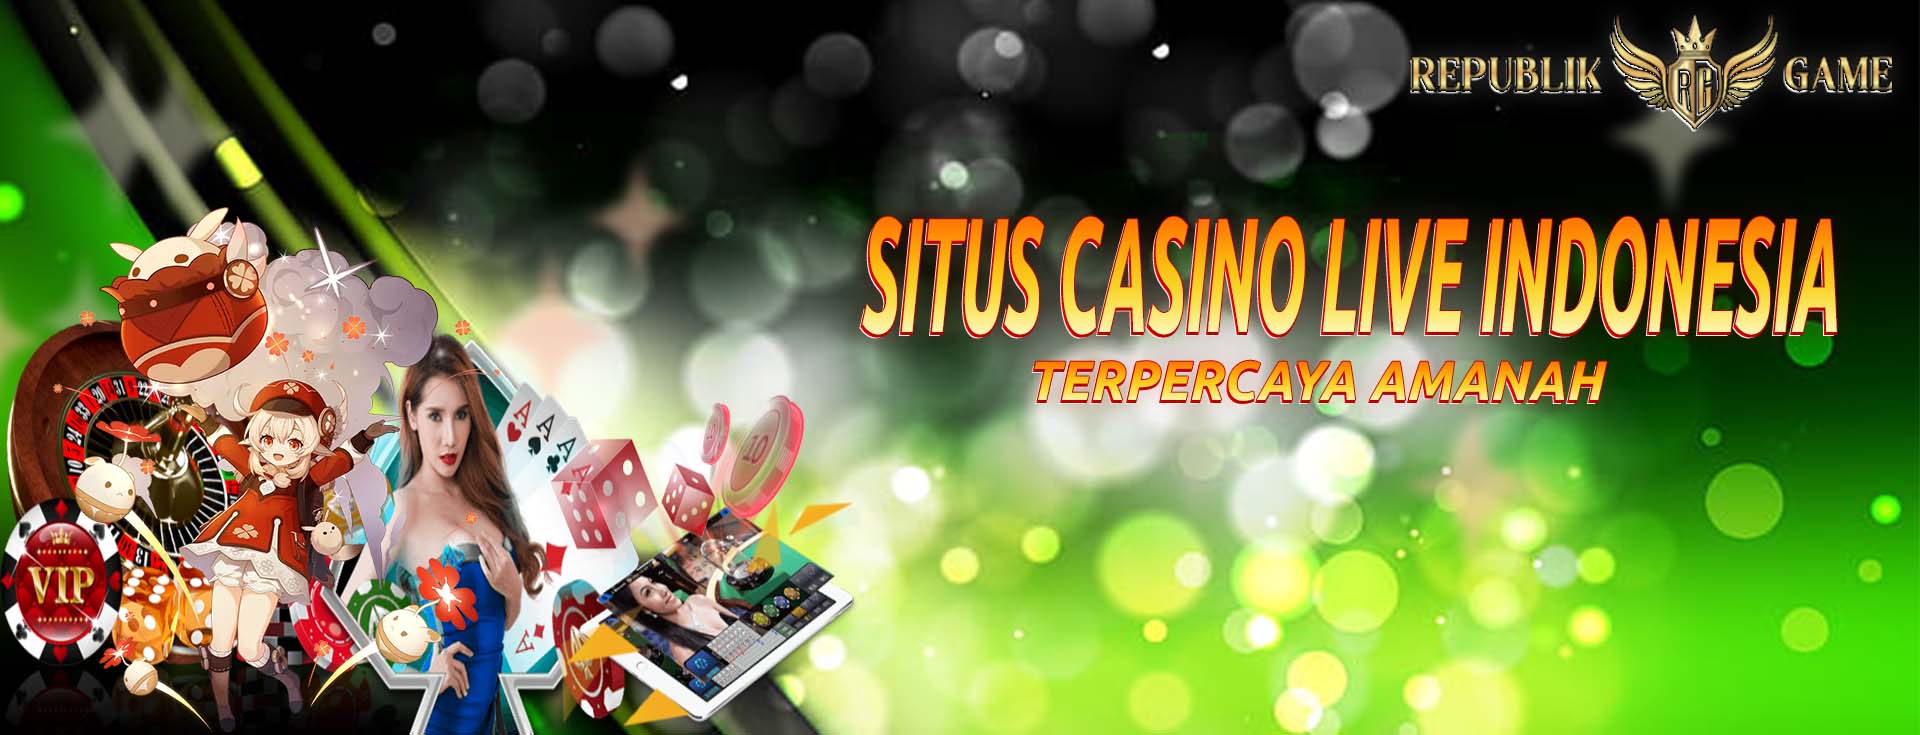 casino live indonesia